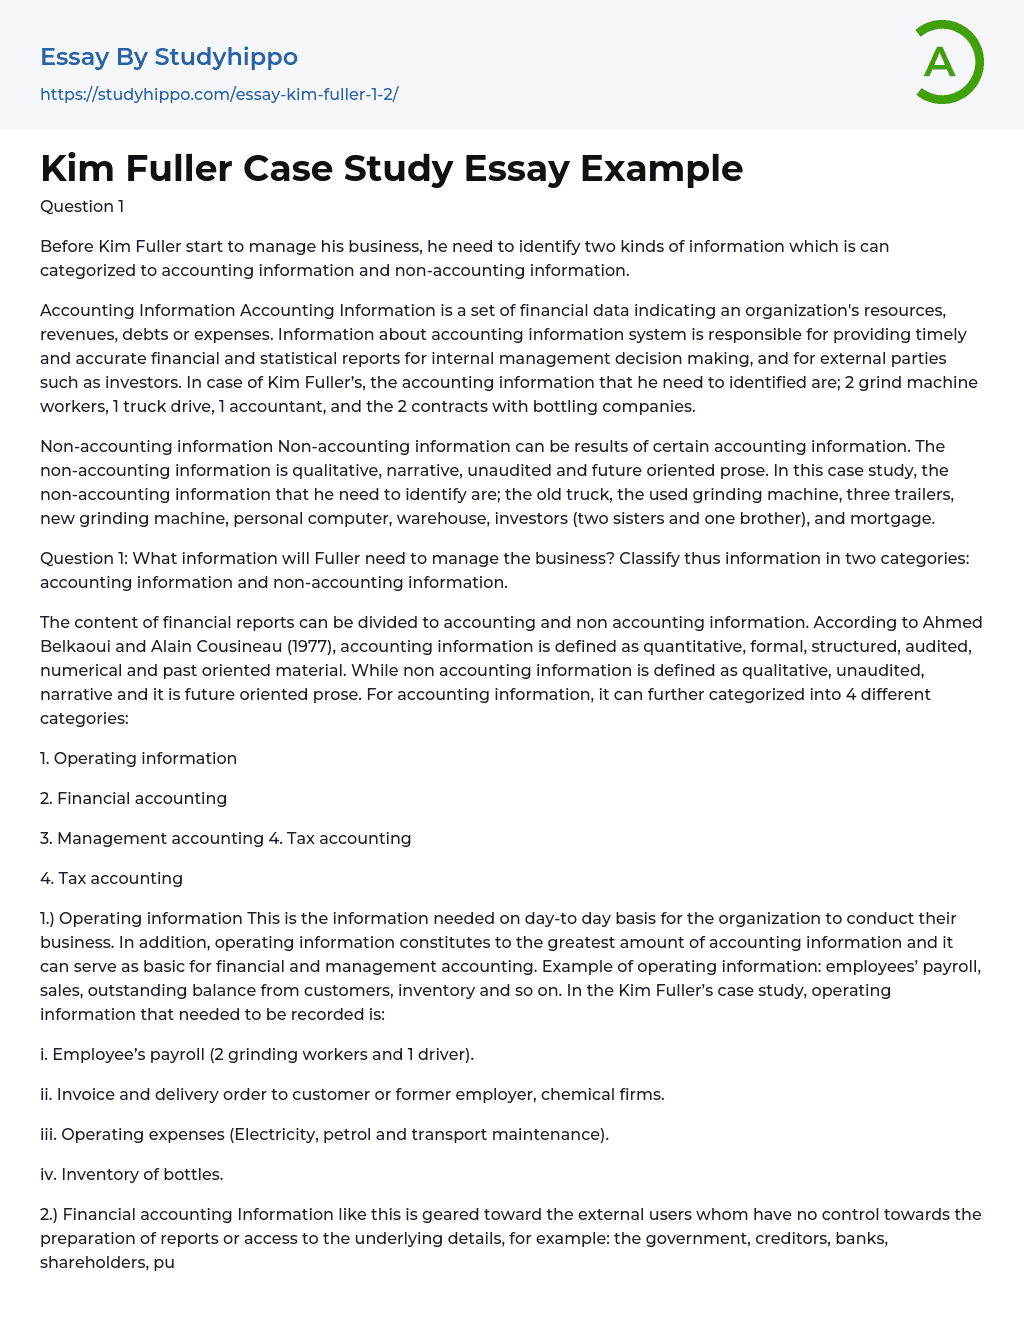 Kim Fuller Case Study Essay Example